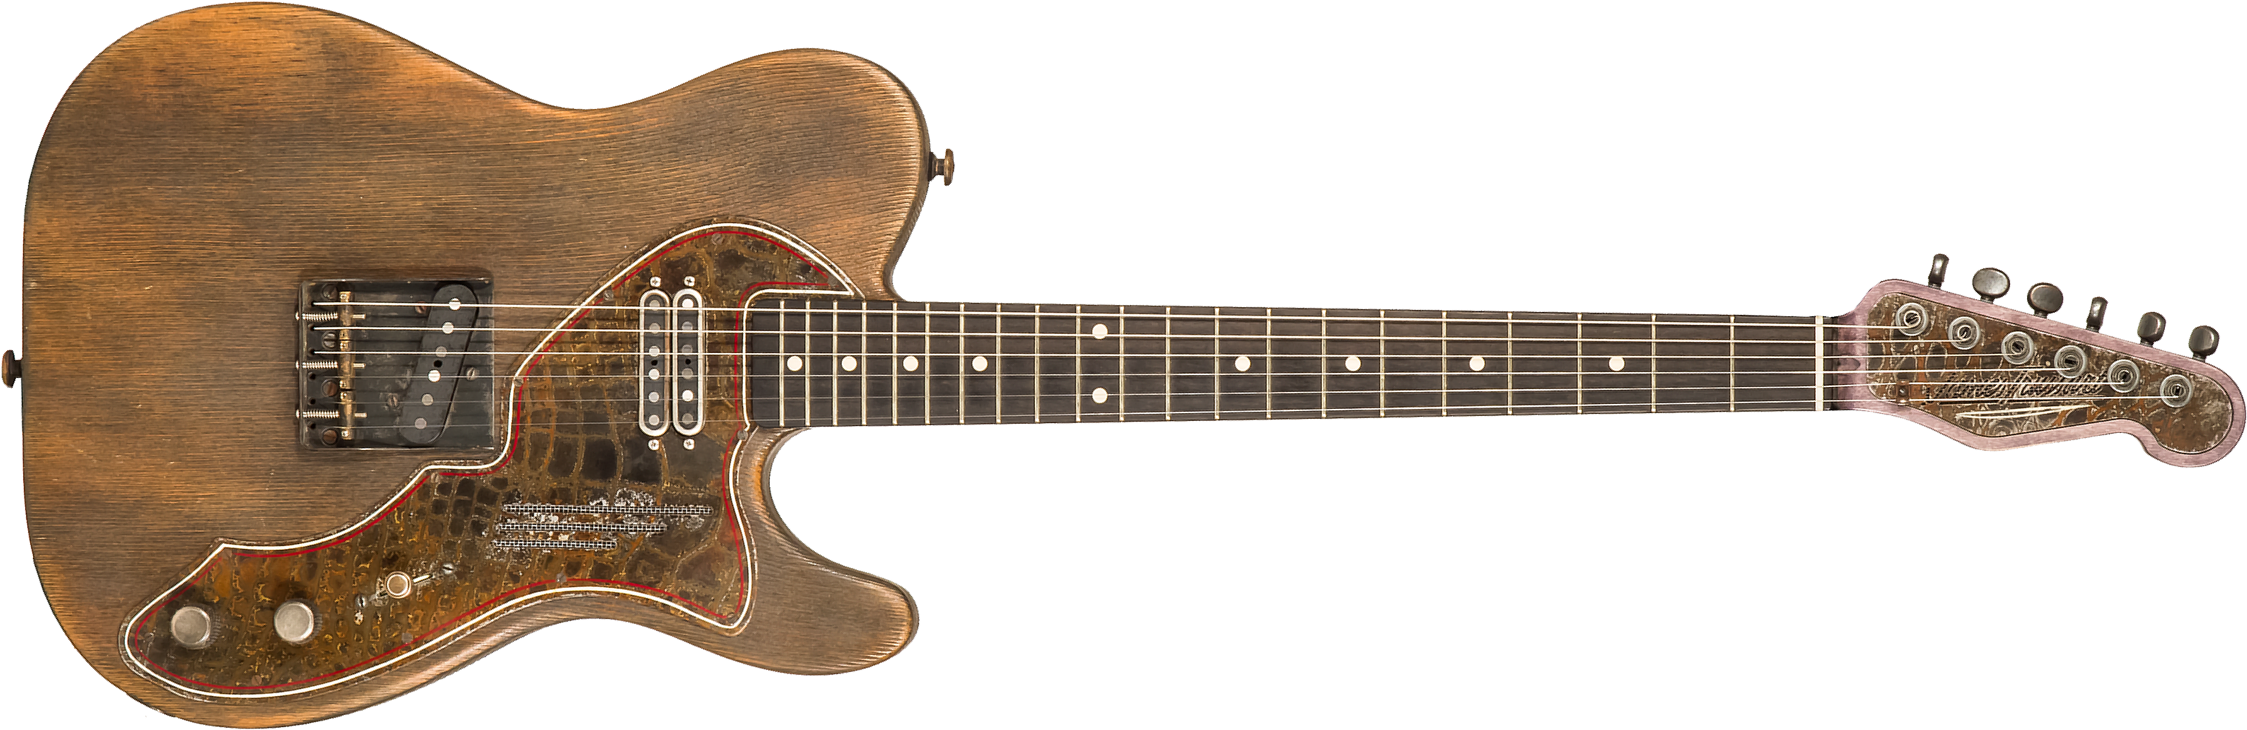 James Trussart Steelguard Caster Sugar Pine Sh Eb #18035 - Rust O Matic Gator Grey Driftwood - E-Gitarre in Teleform - Main picture